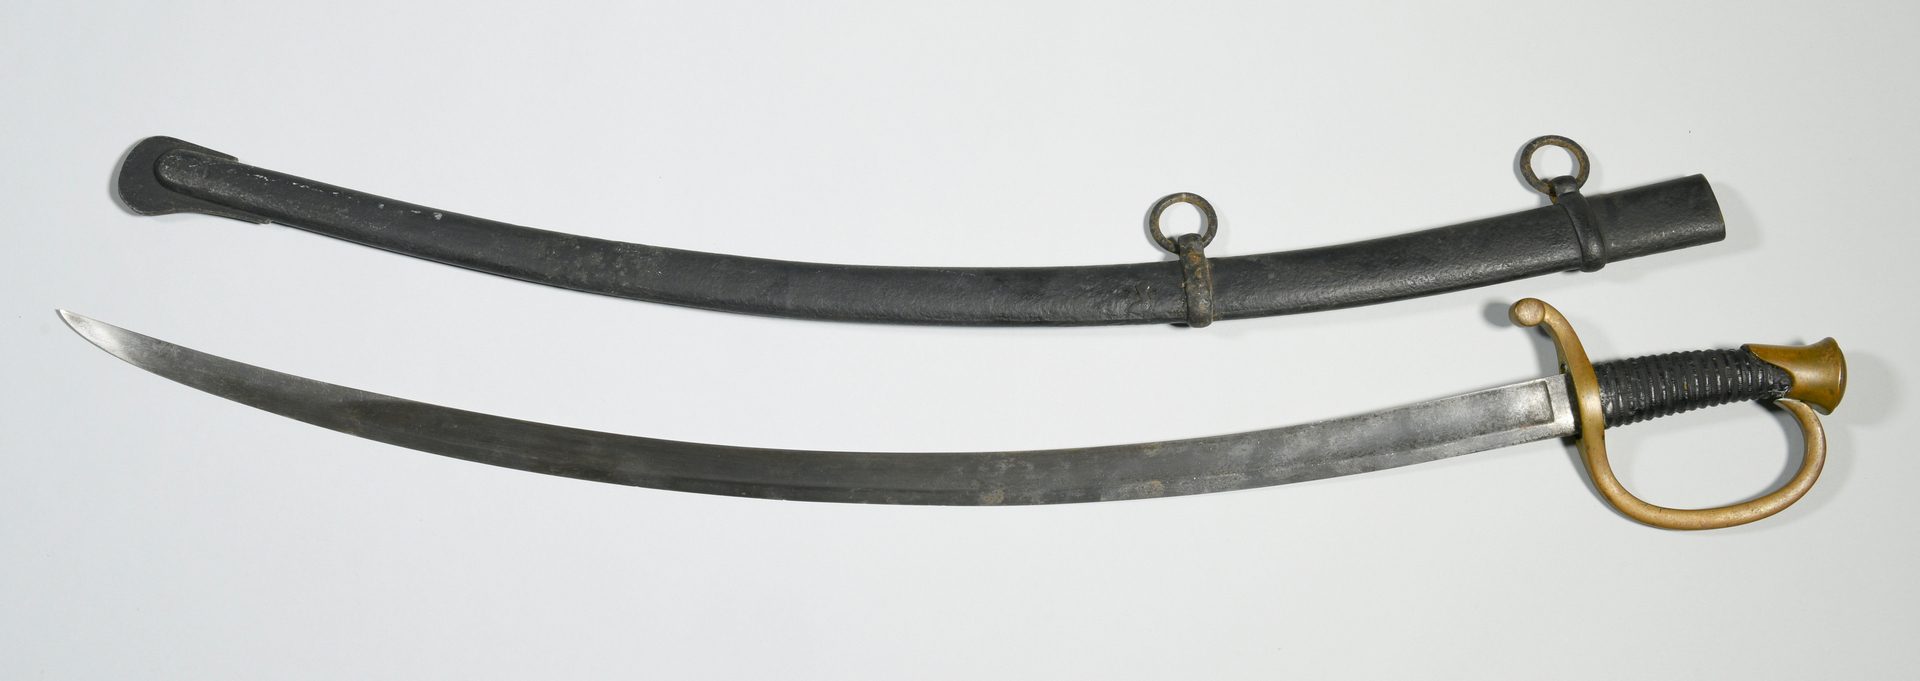 Lot 295: 2 Civil War Era Officer's Swords, Devon Farm